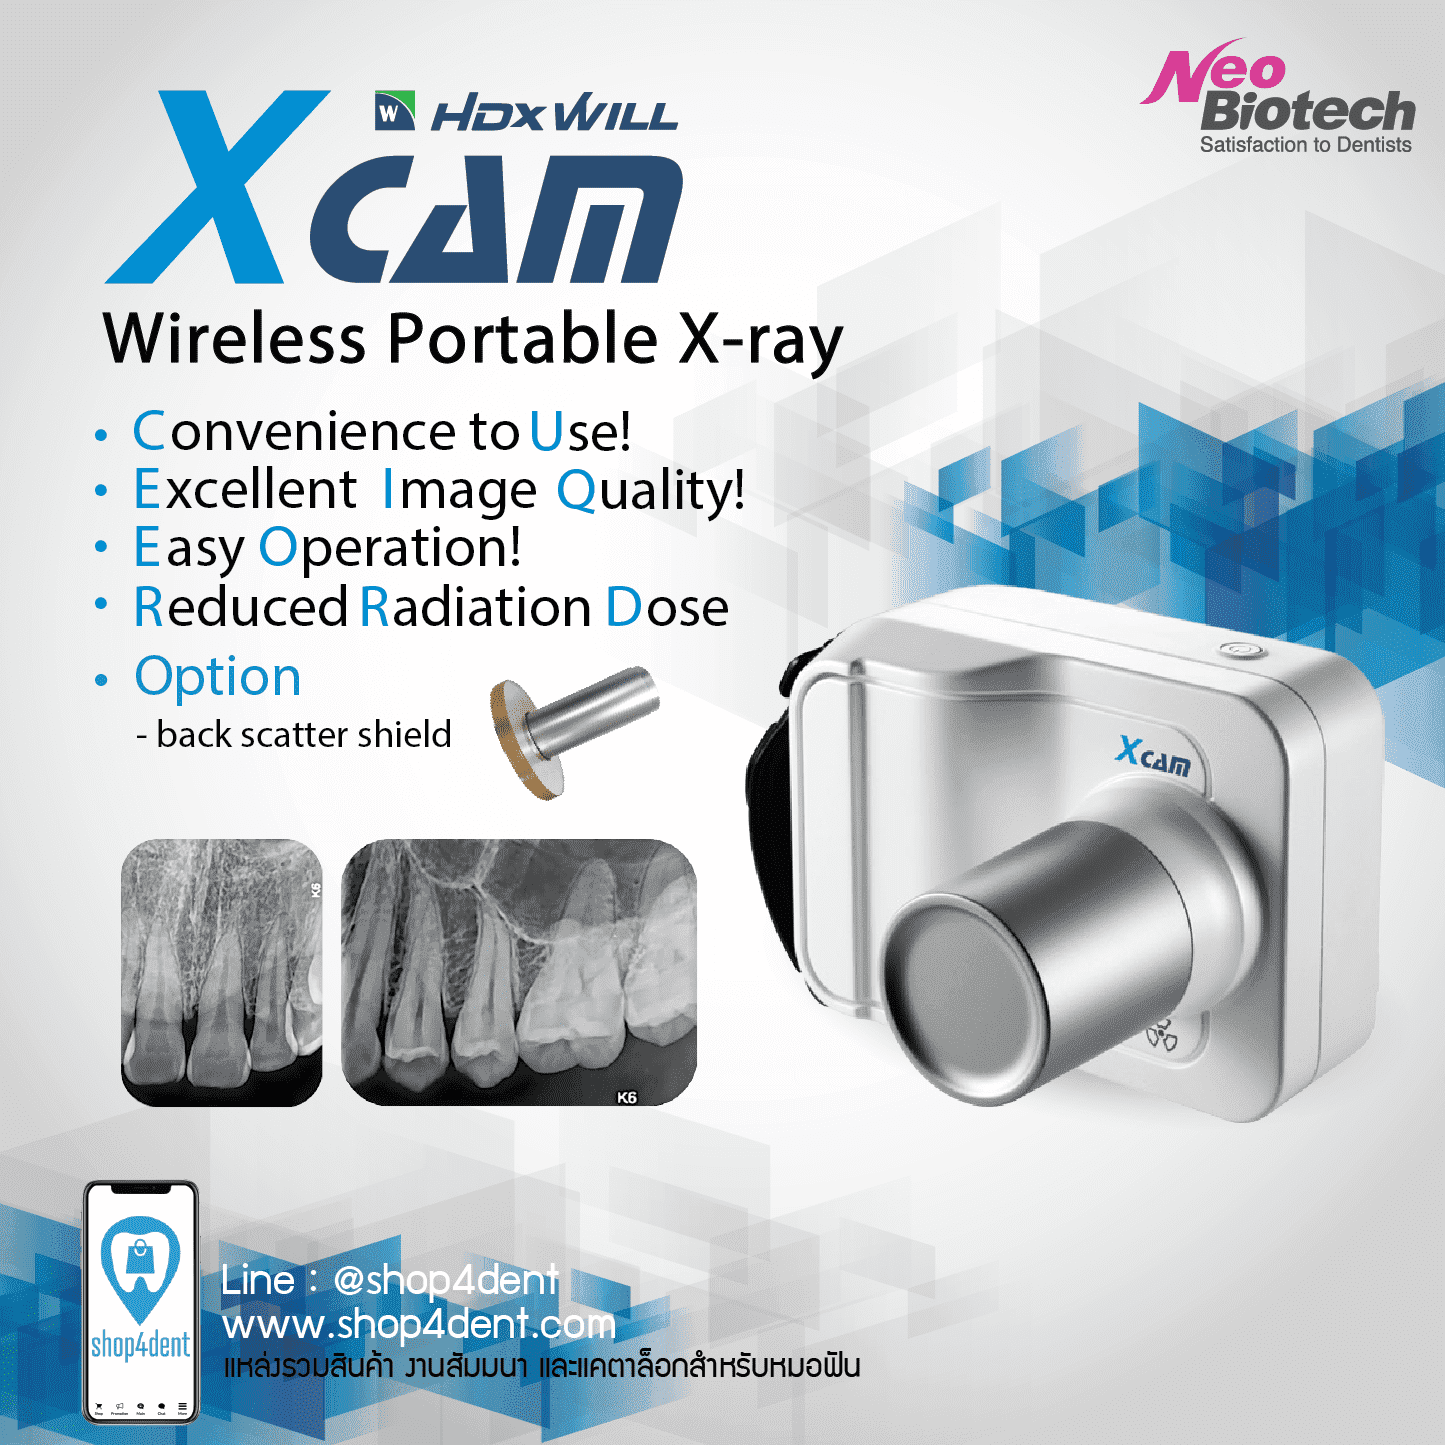 Neobiotech HDX Will XCAM Wireless Portable X-ray